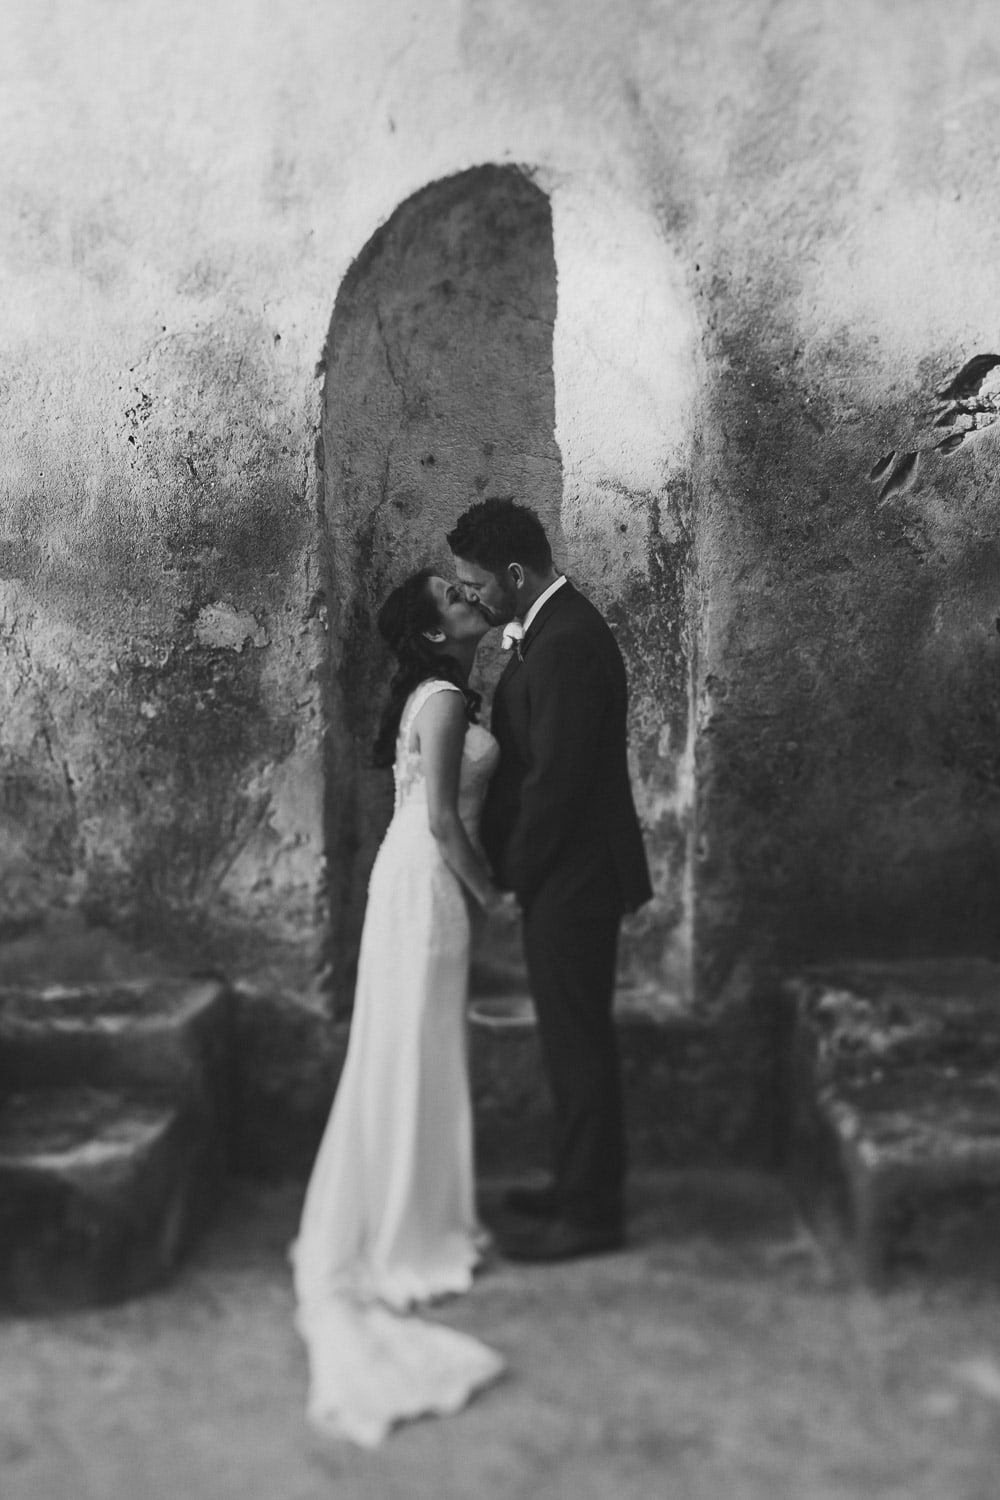 Penha longa sintra wedding photographer